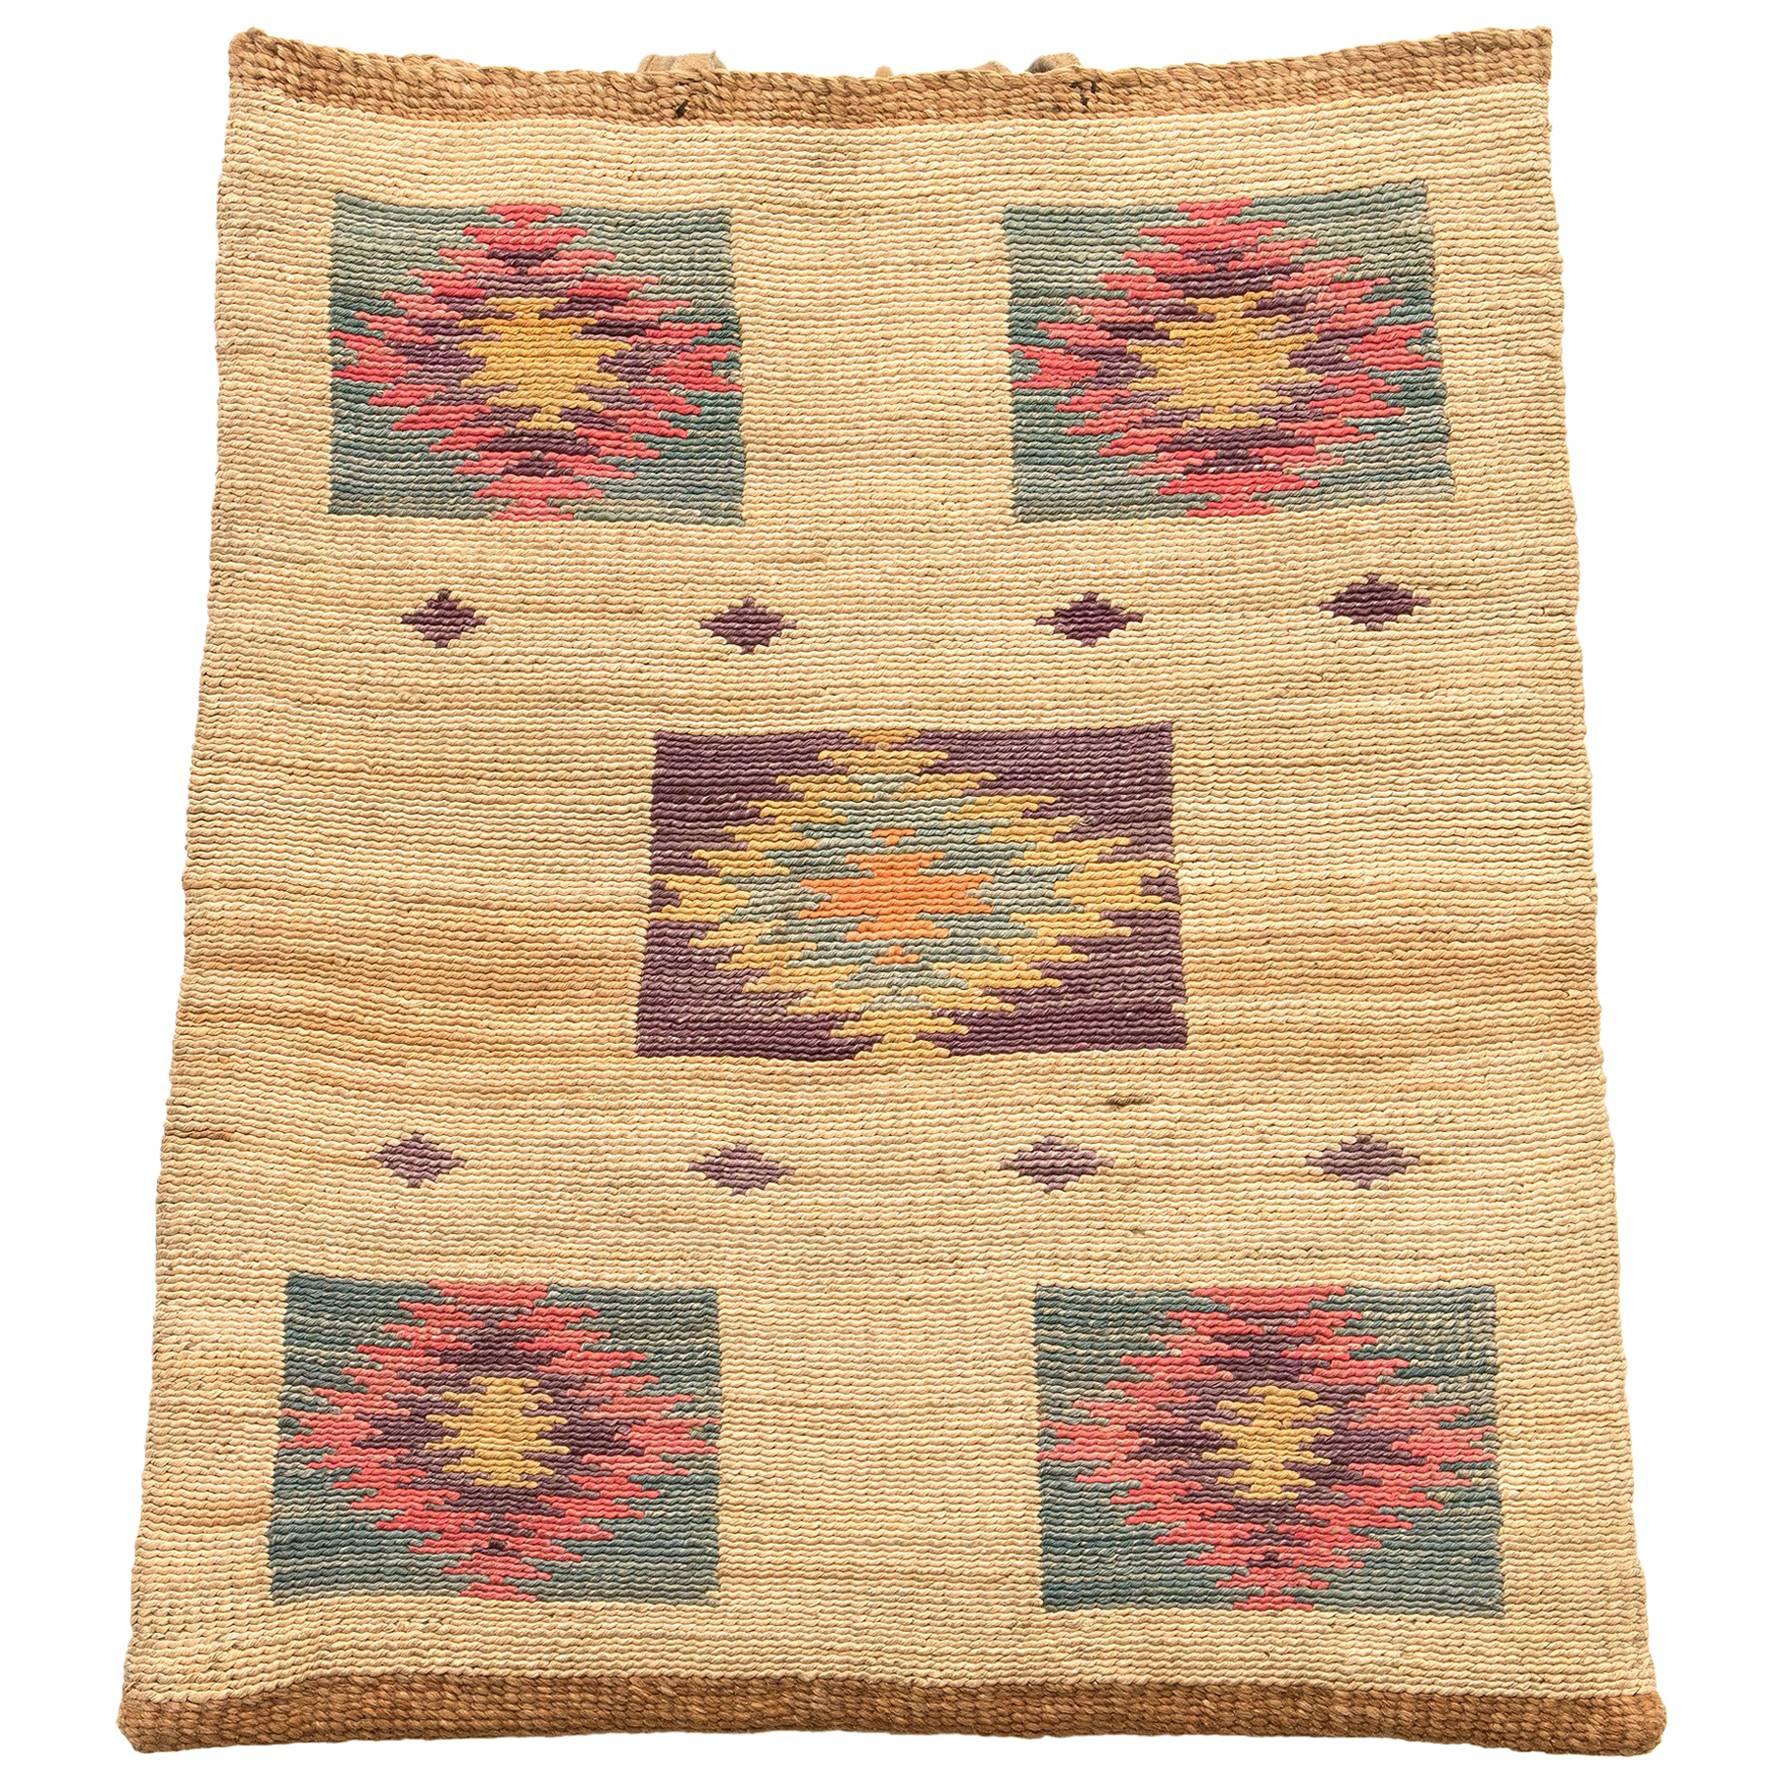 Antique Native American Woven Cornhusk Bag, Plateau, 19th Century